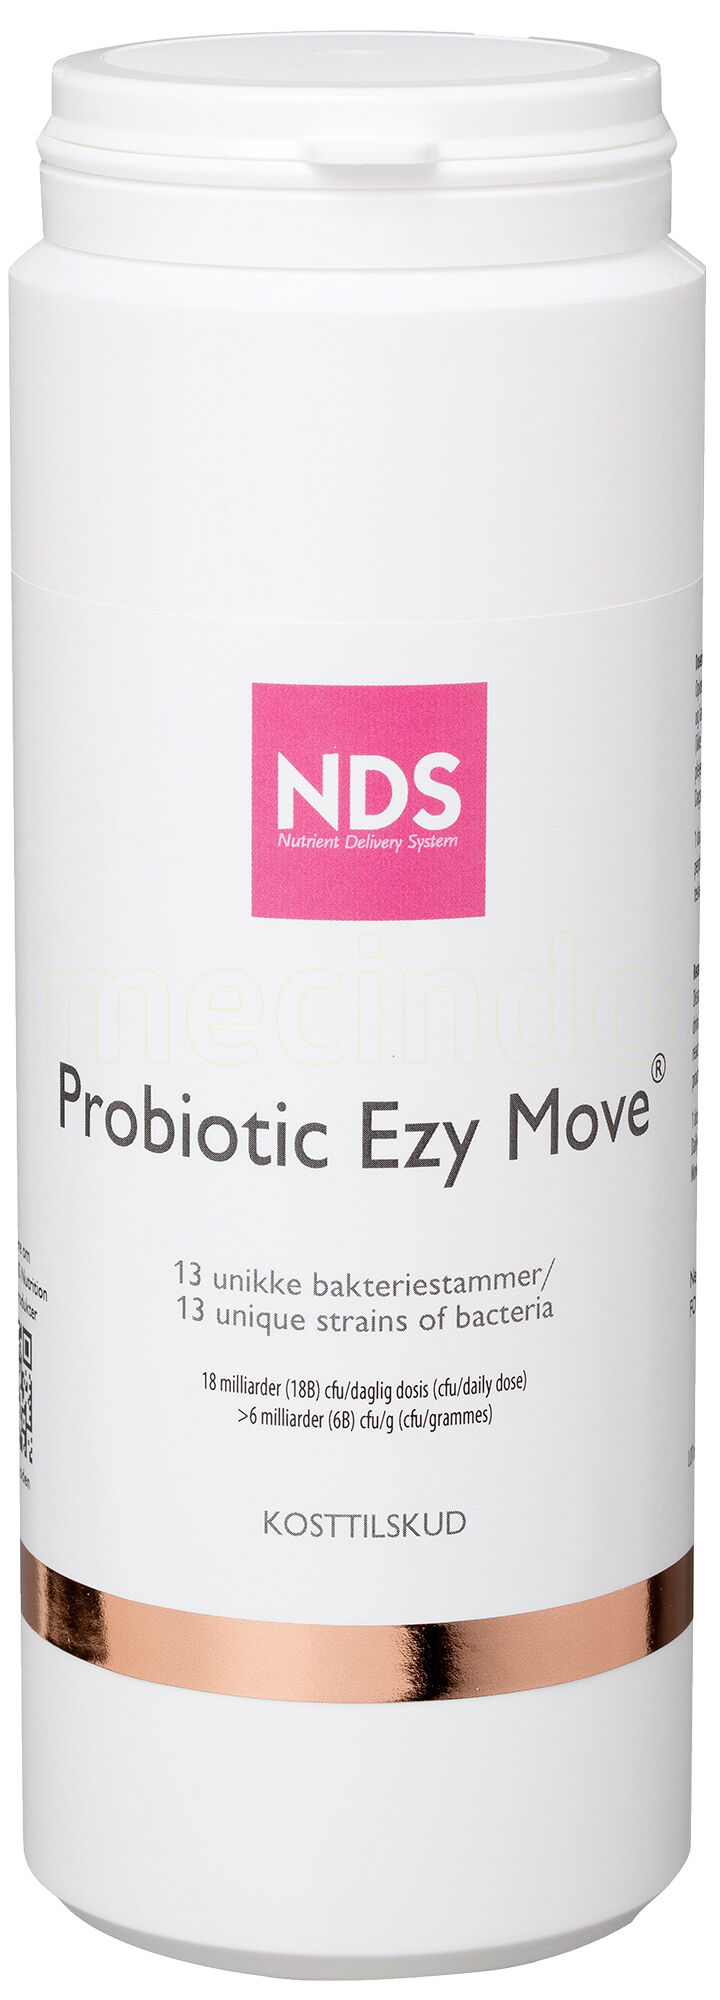 NDS Probiotic Ezy Move - 225 g